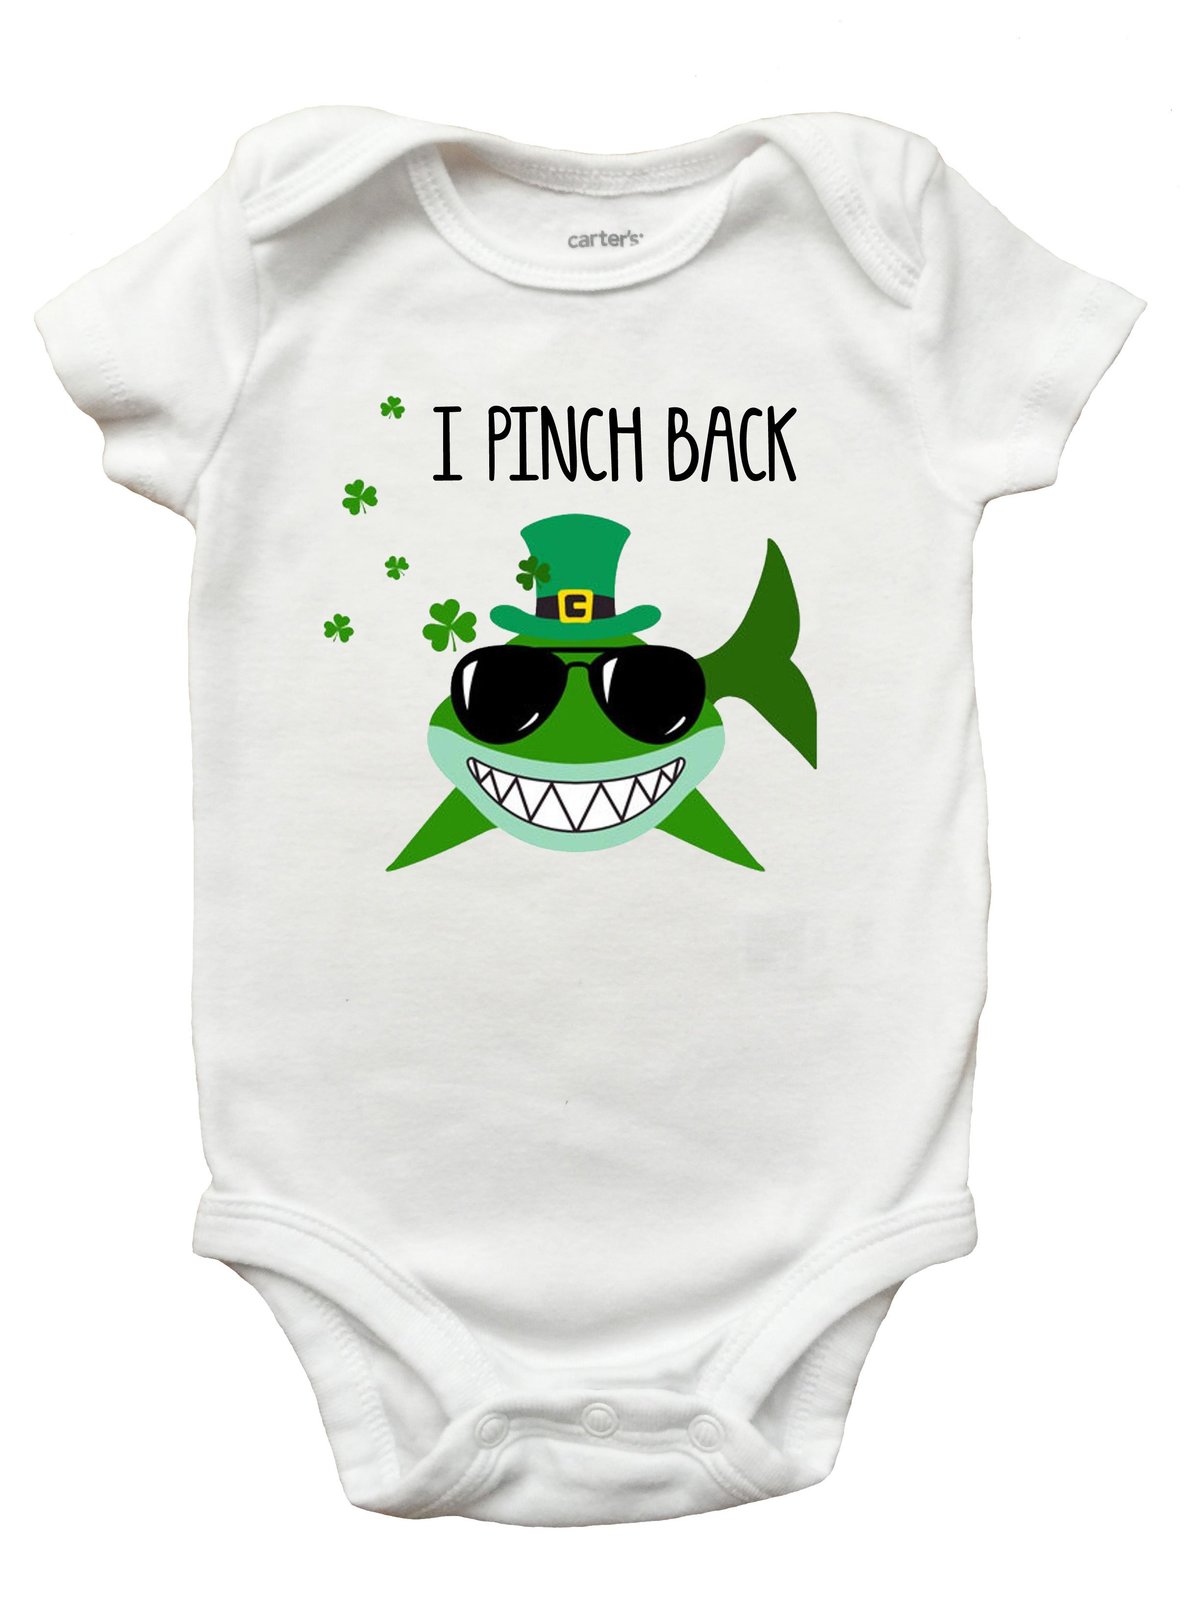 I Pinch Back Childrens Shirt, Baby Shark I Pinch Back Shirt, St Patricks Day Top